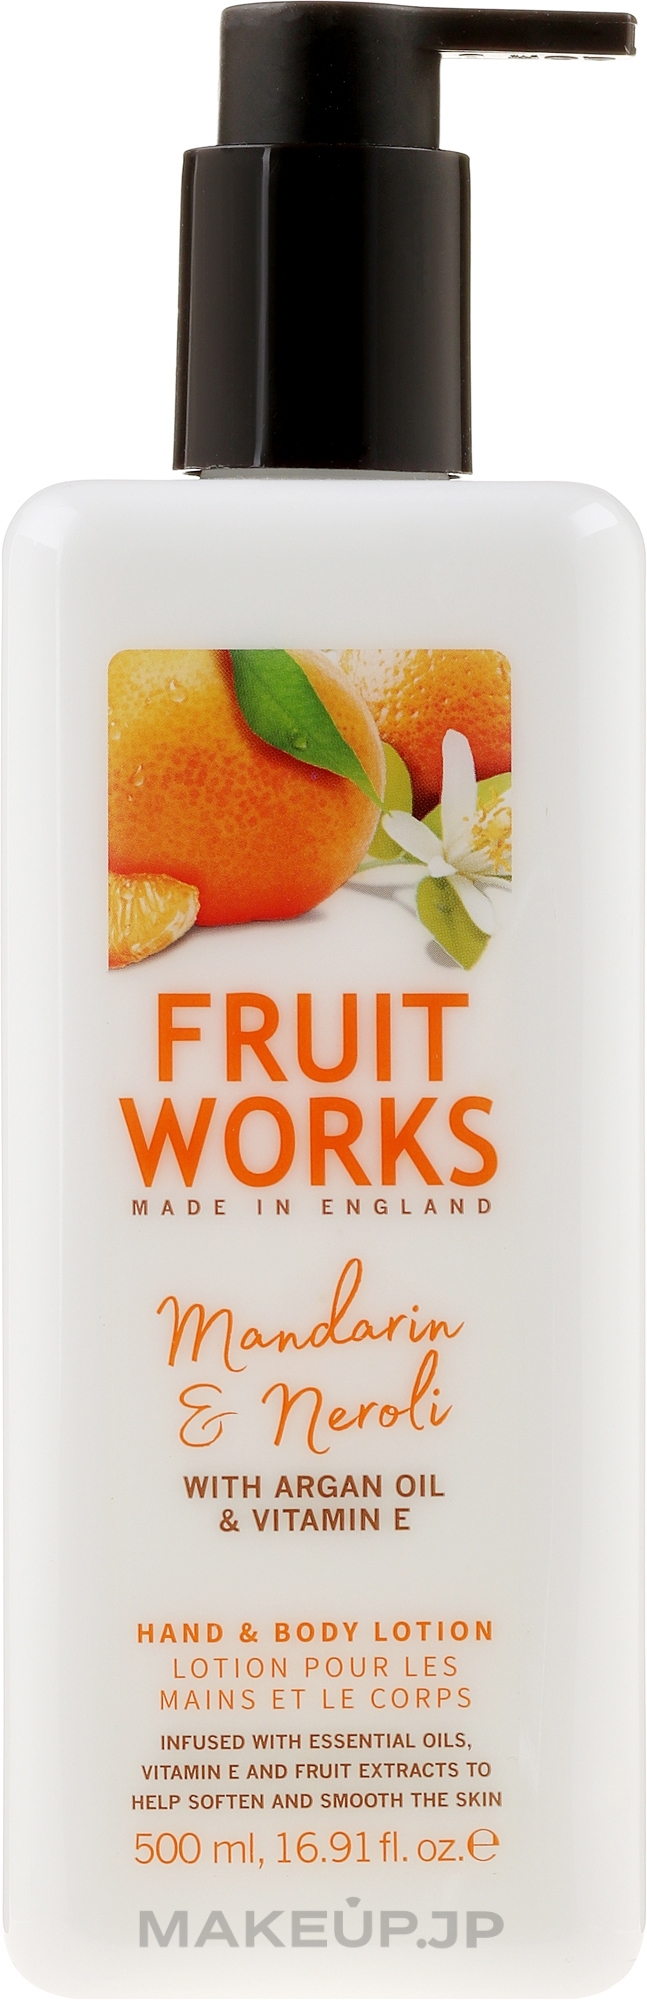 Mandarin & Neroli Hand & Body Lotion - Grace Cole Fruit Works Hand & Body Lotion Mandarin & Neroli — photo 500 ml